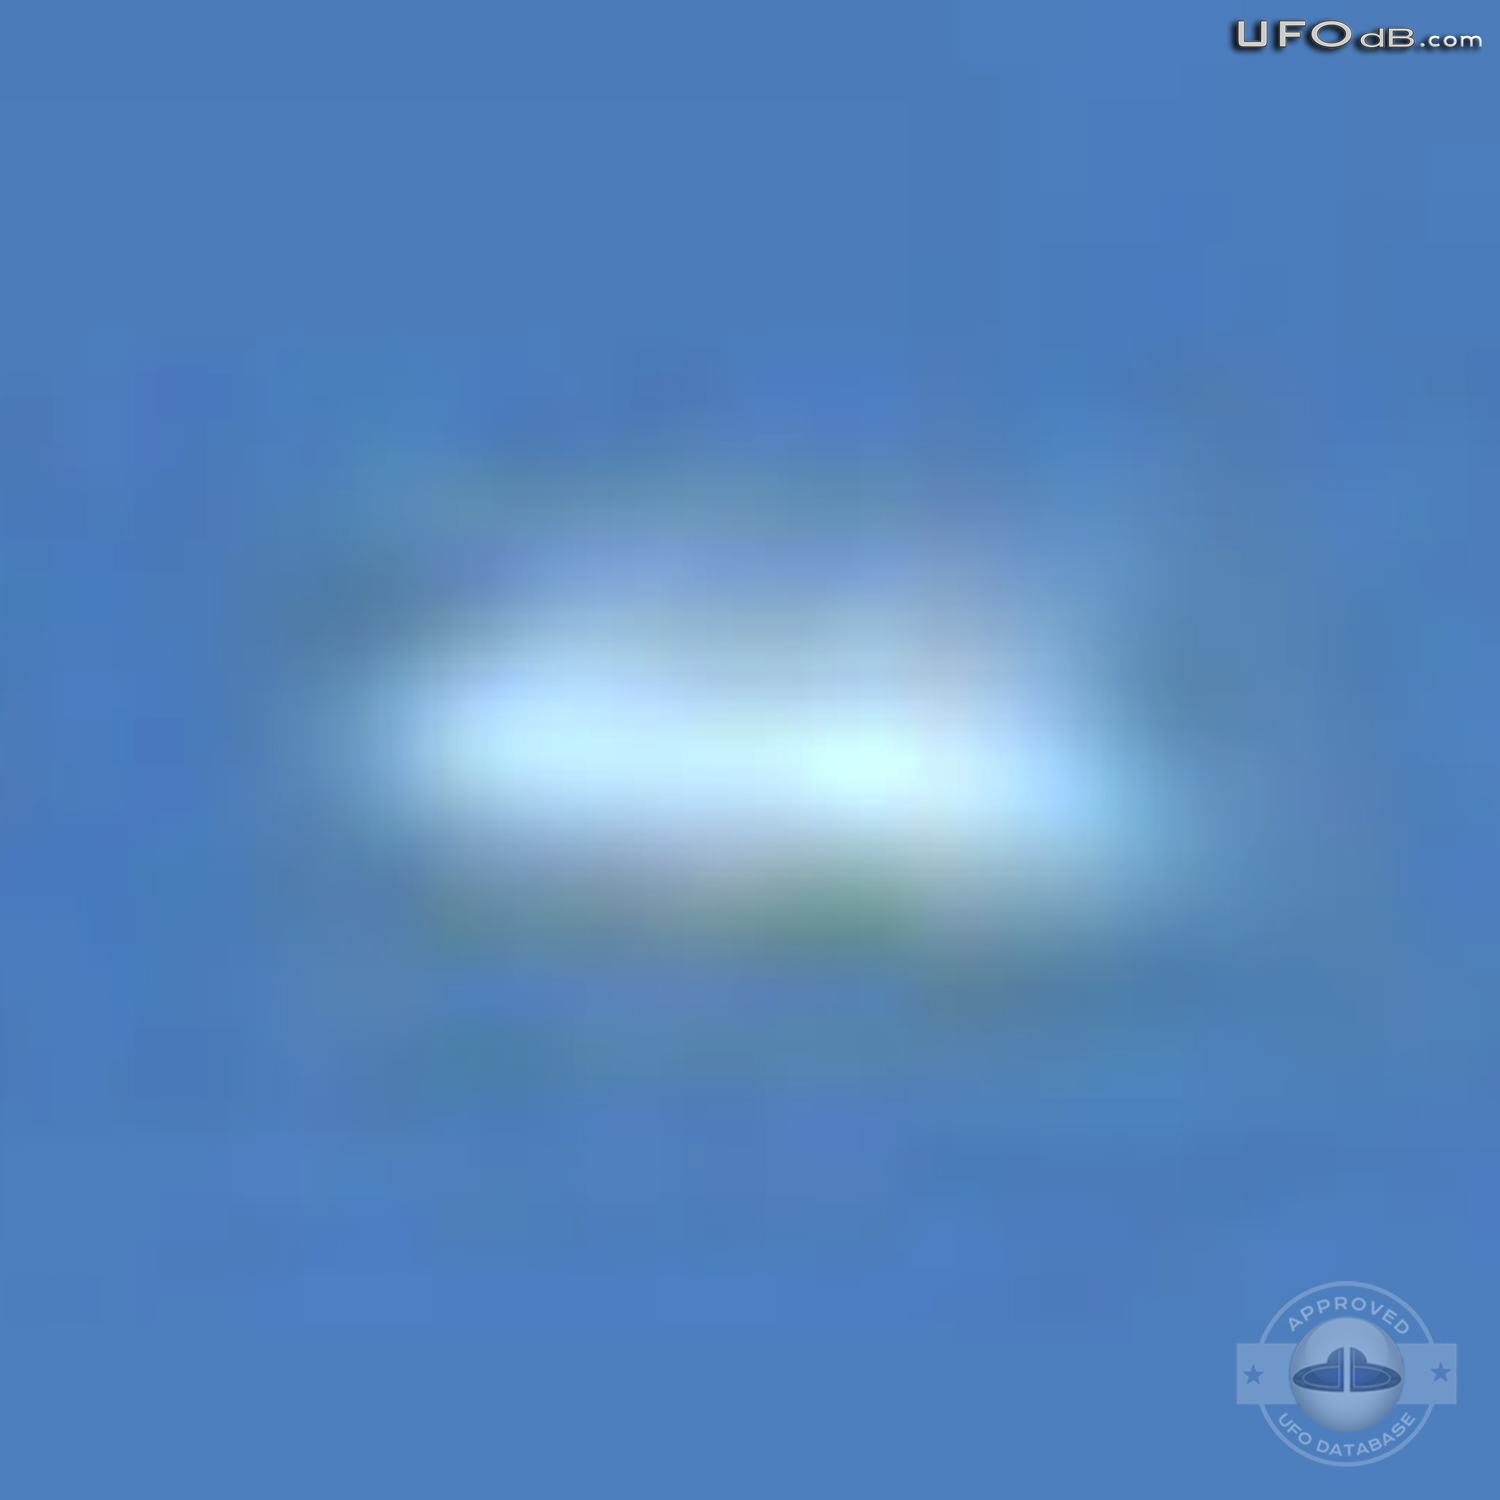 TACA passenger get UFO picture during flight over Peru | June 18 2010 UFO Picture #317-6